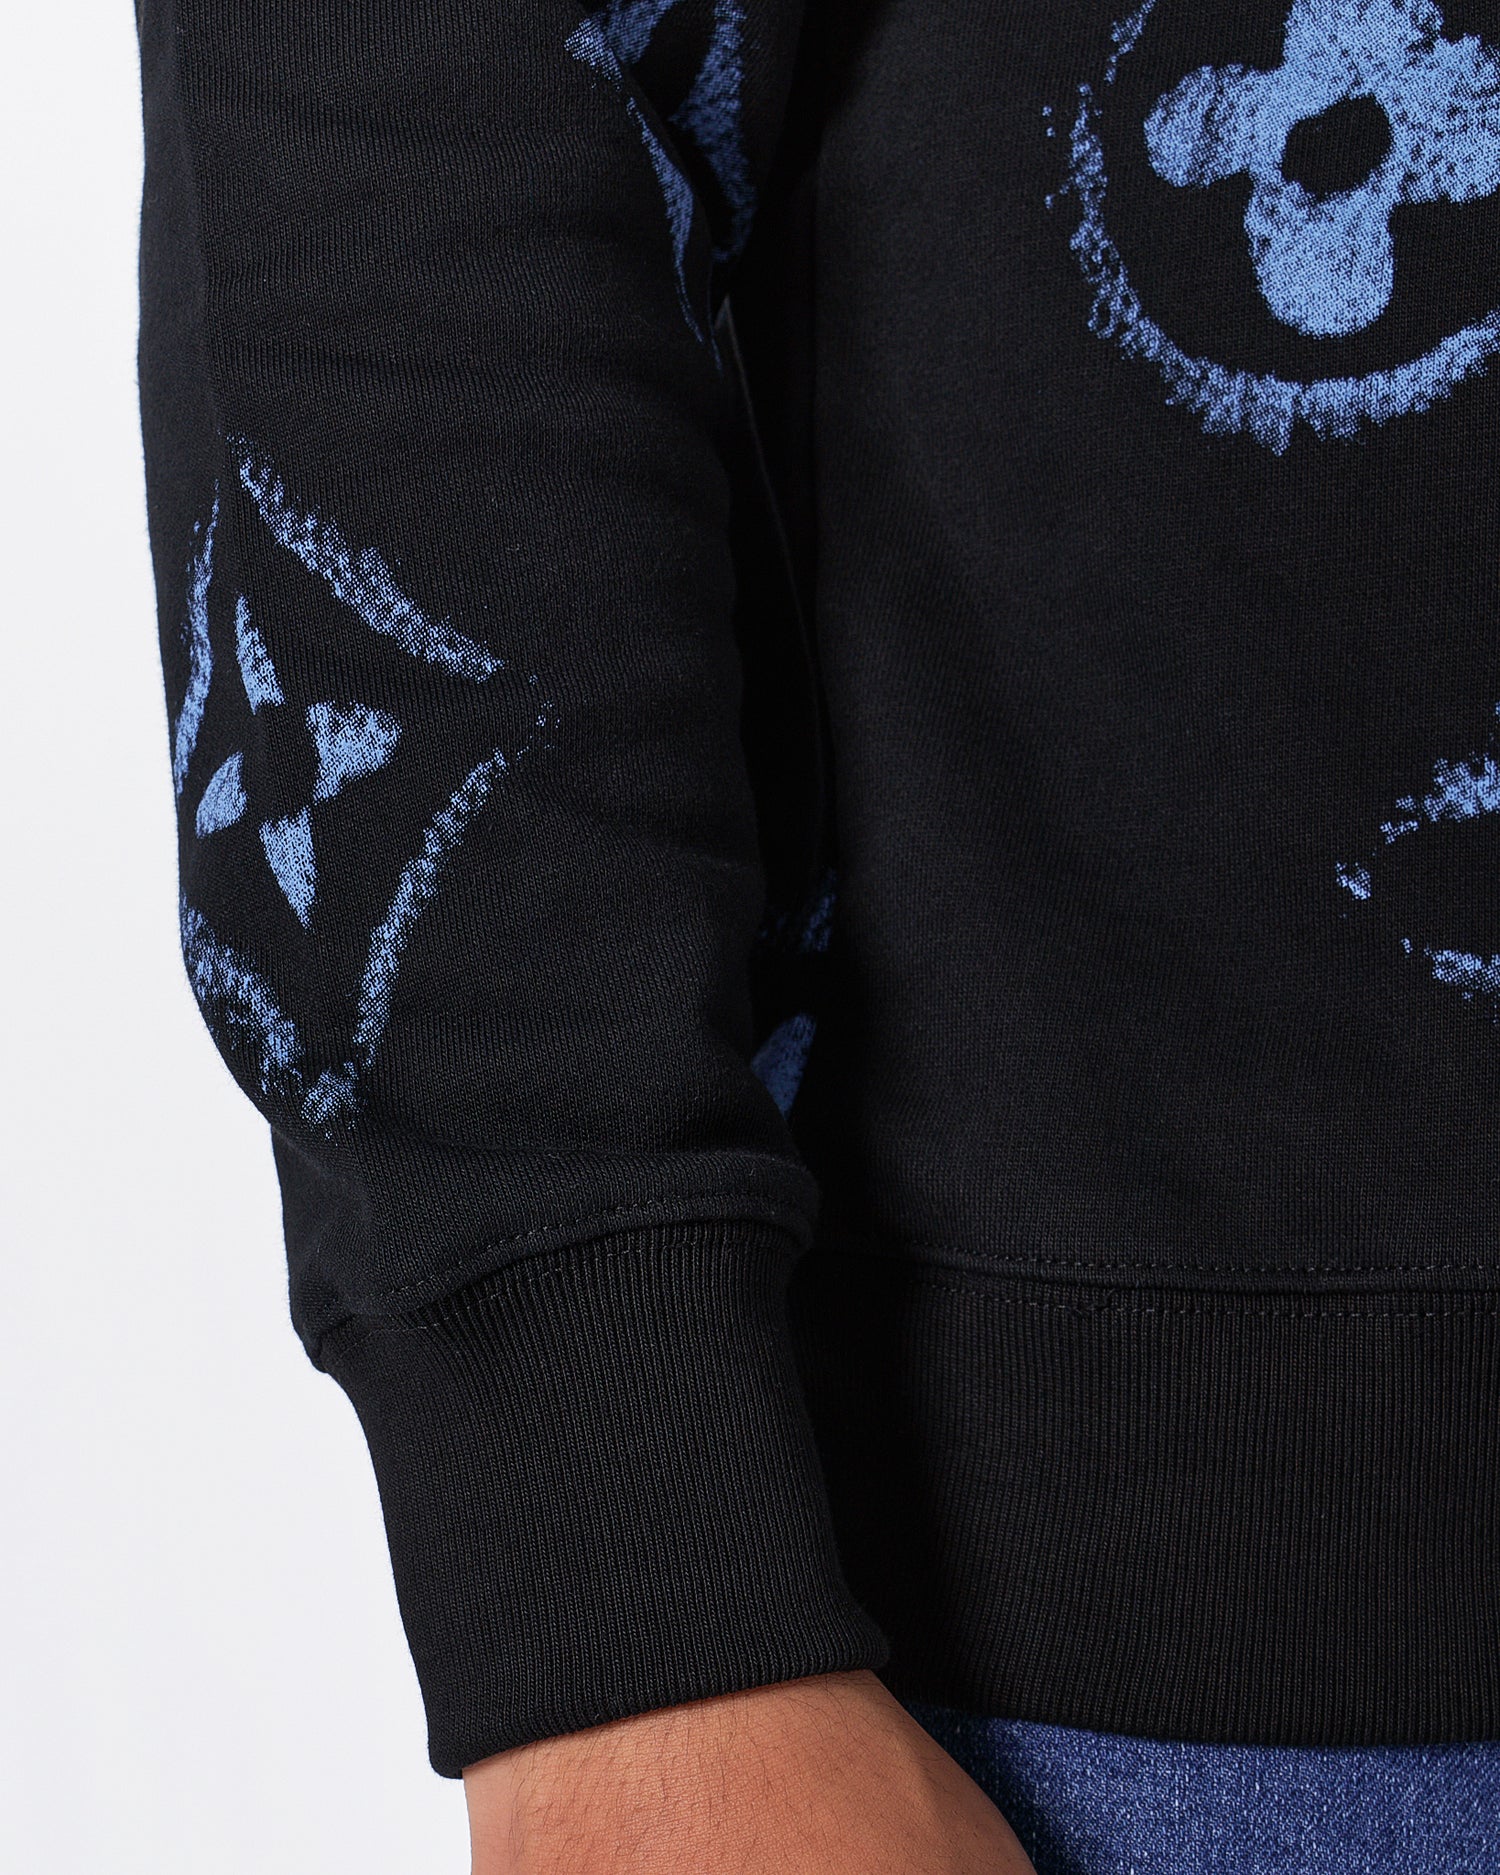 LV Monogram Over Printed Men Black Sweater 32.90